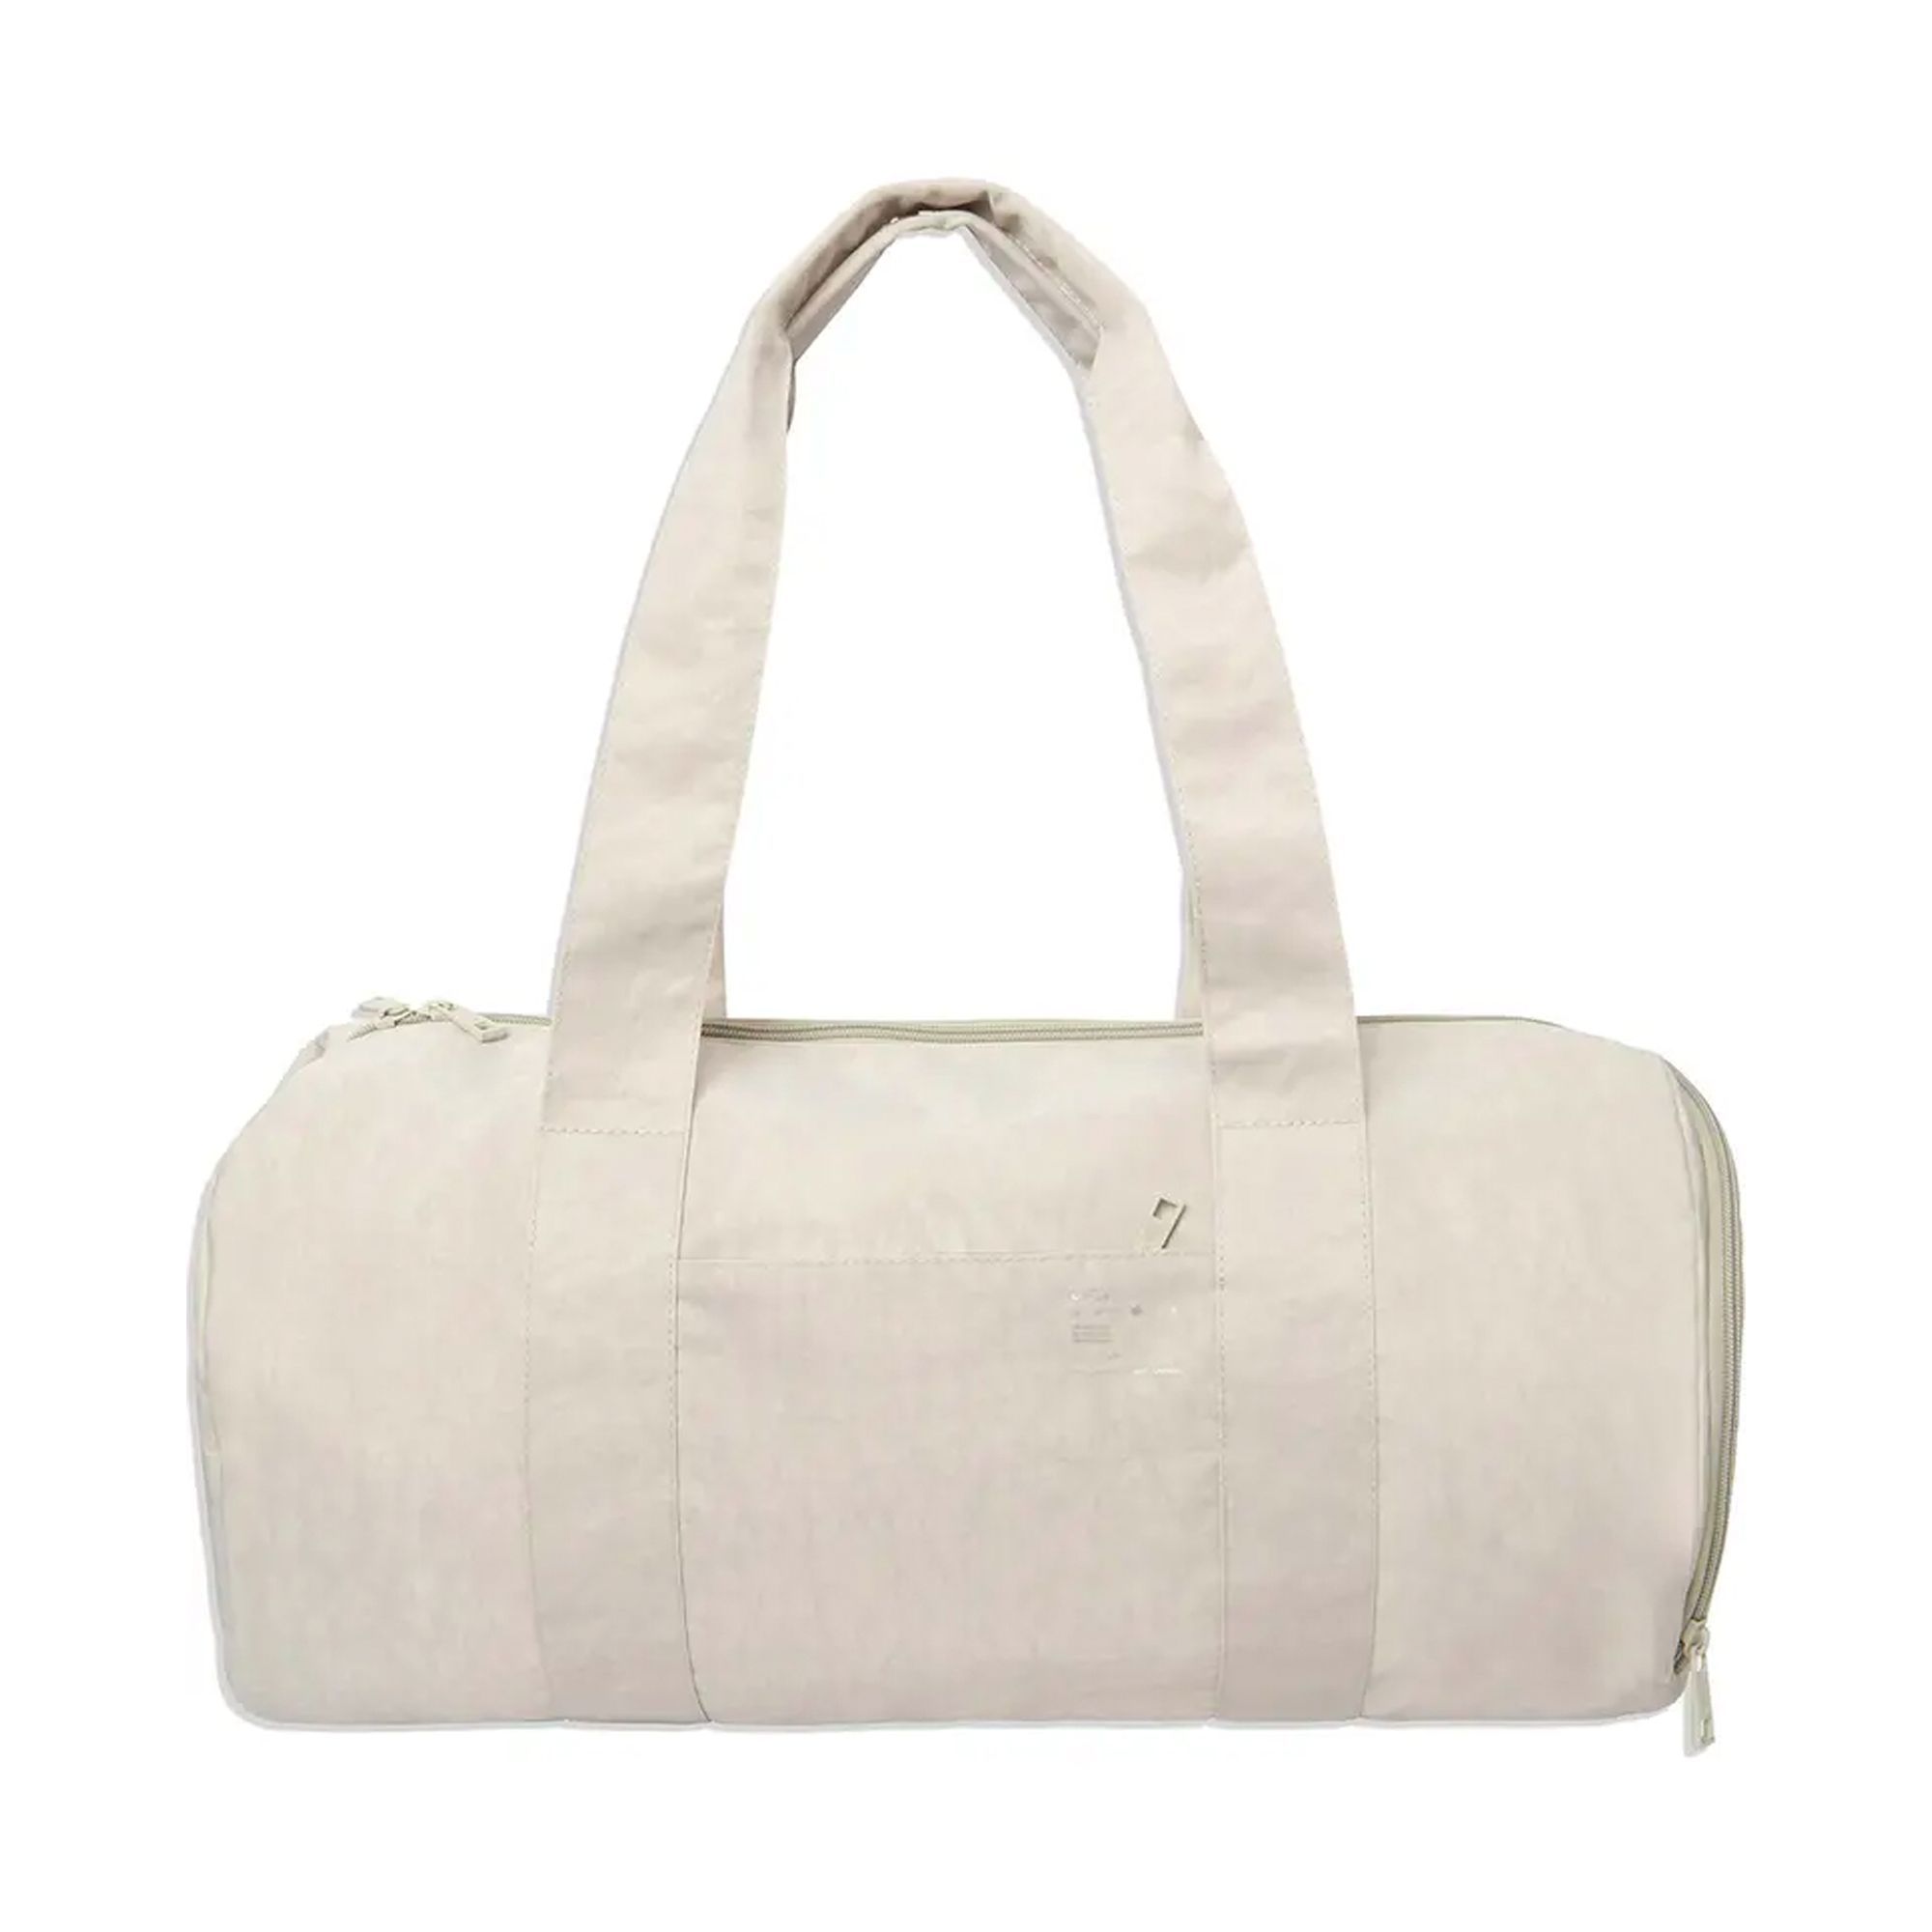 G Goddess Aesthetic Bags & Purses Luggage & Travel Overnight Bags V FLOWERS & THORNS Weekender Bag Weekend Bag 